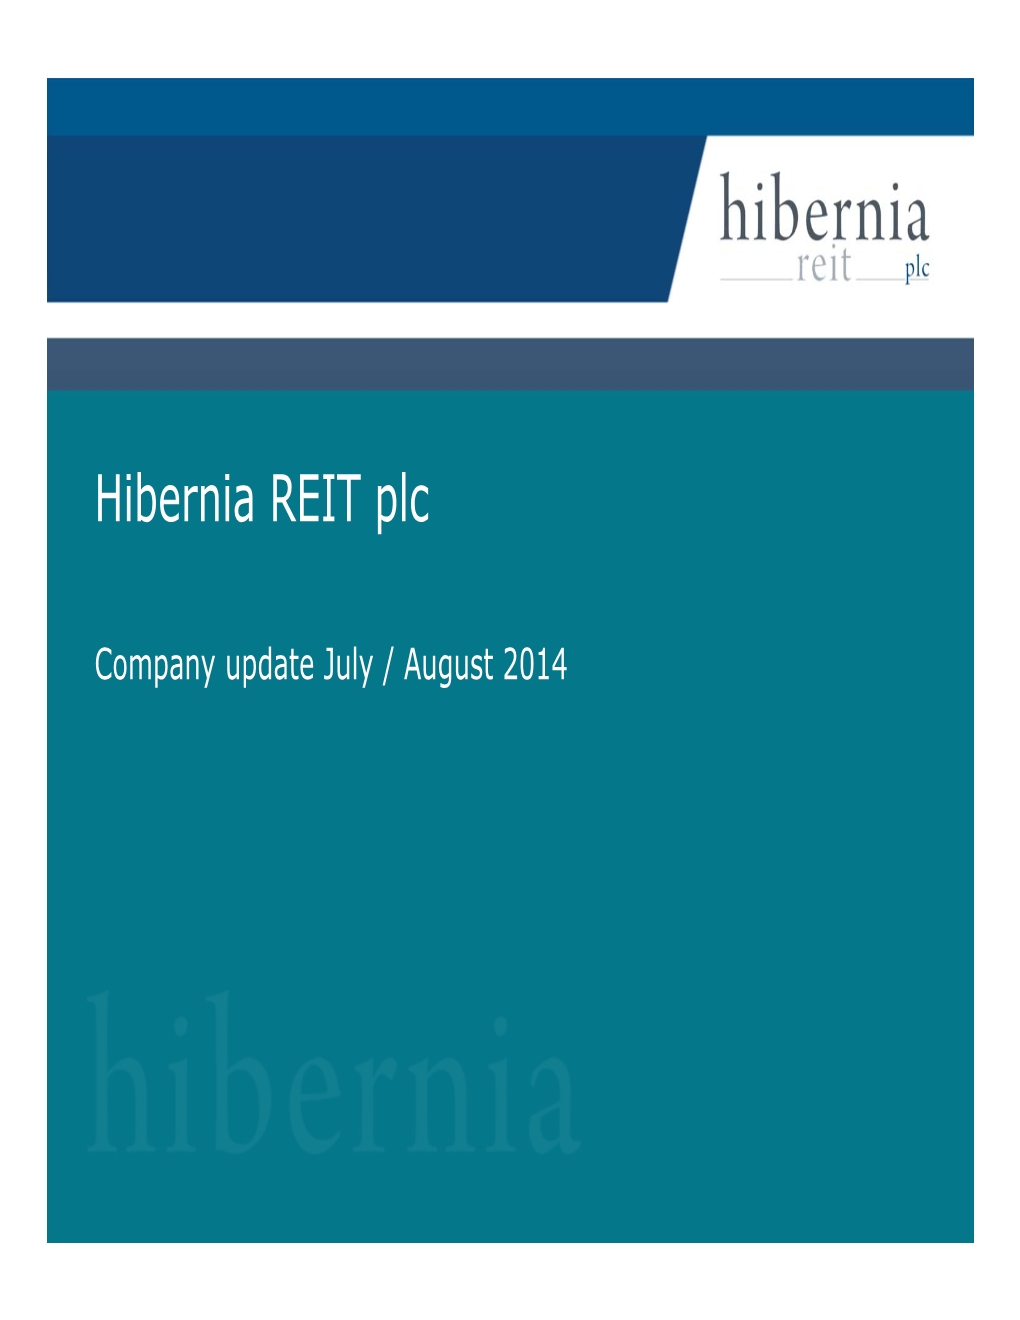 Hibernia REIT Plc